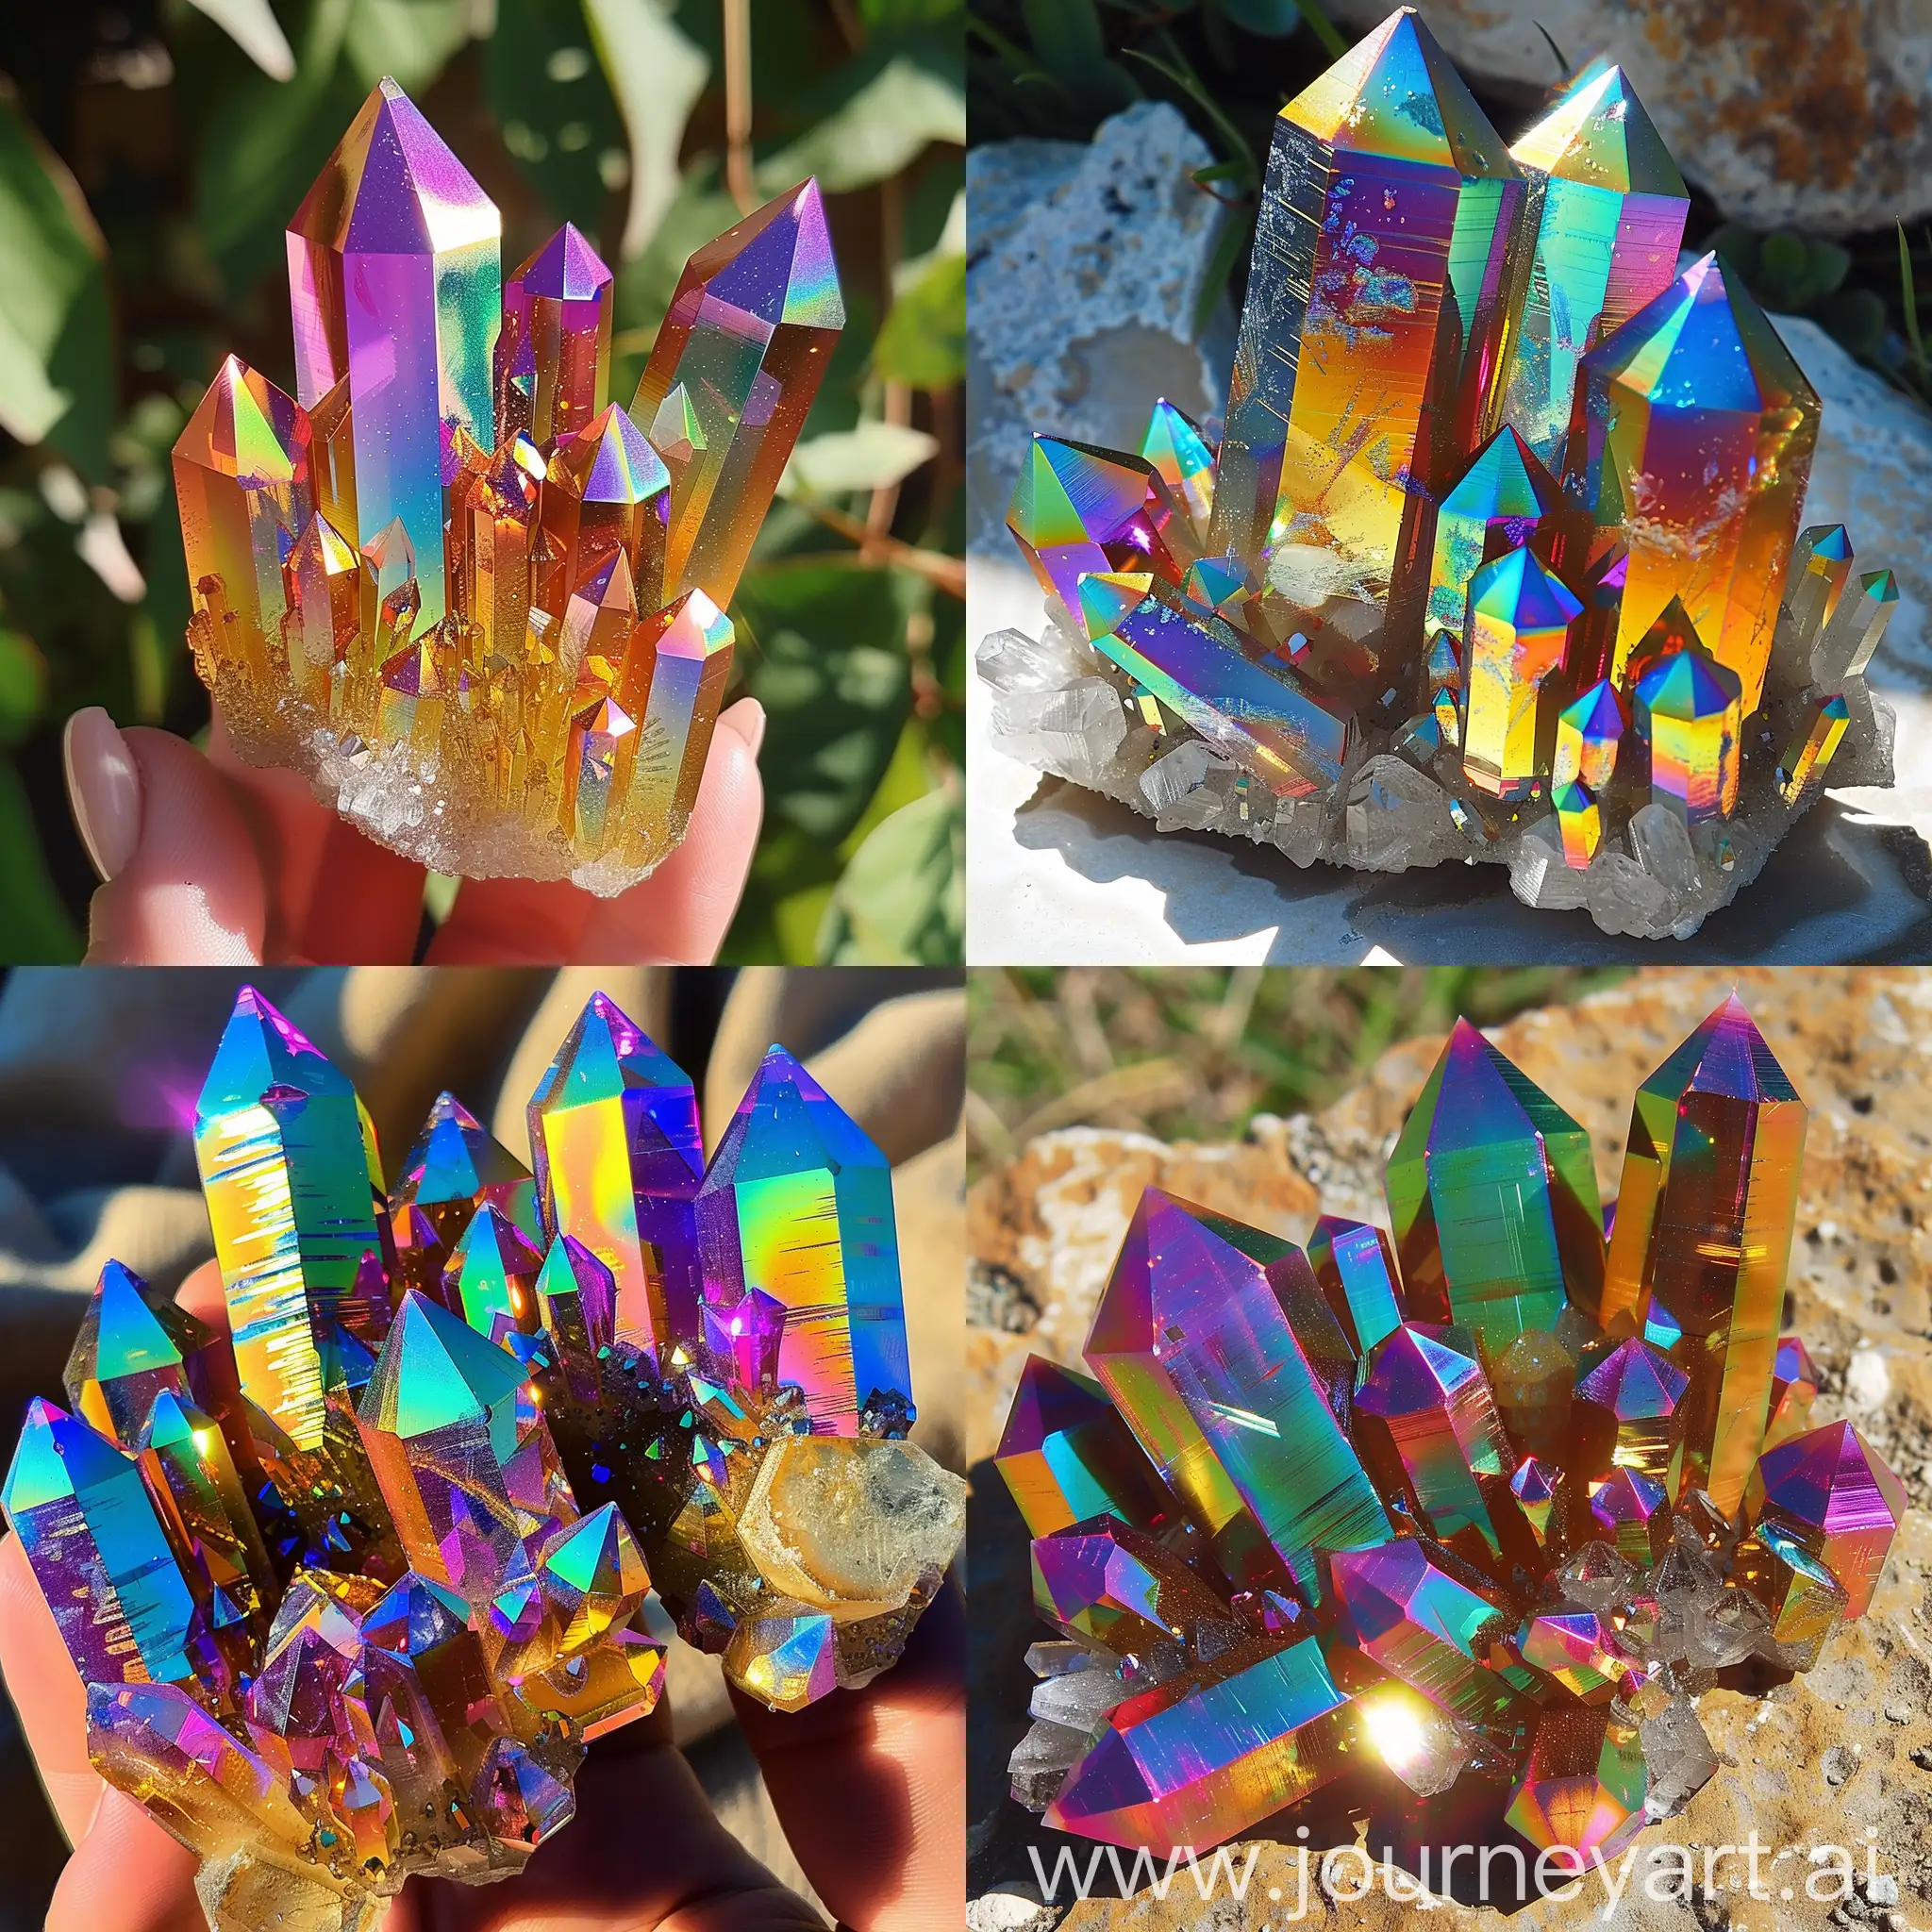 Vibrant-Rainbow-Prestige-Crystals-in-Harmonious-Array